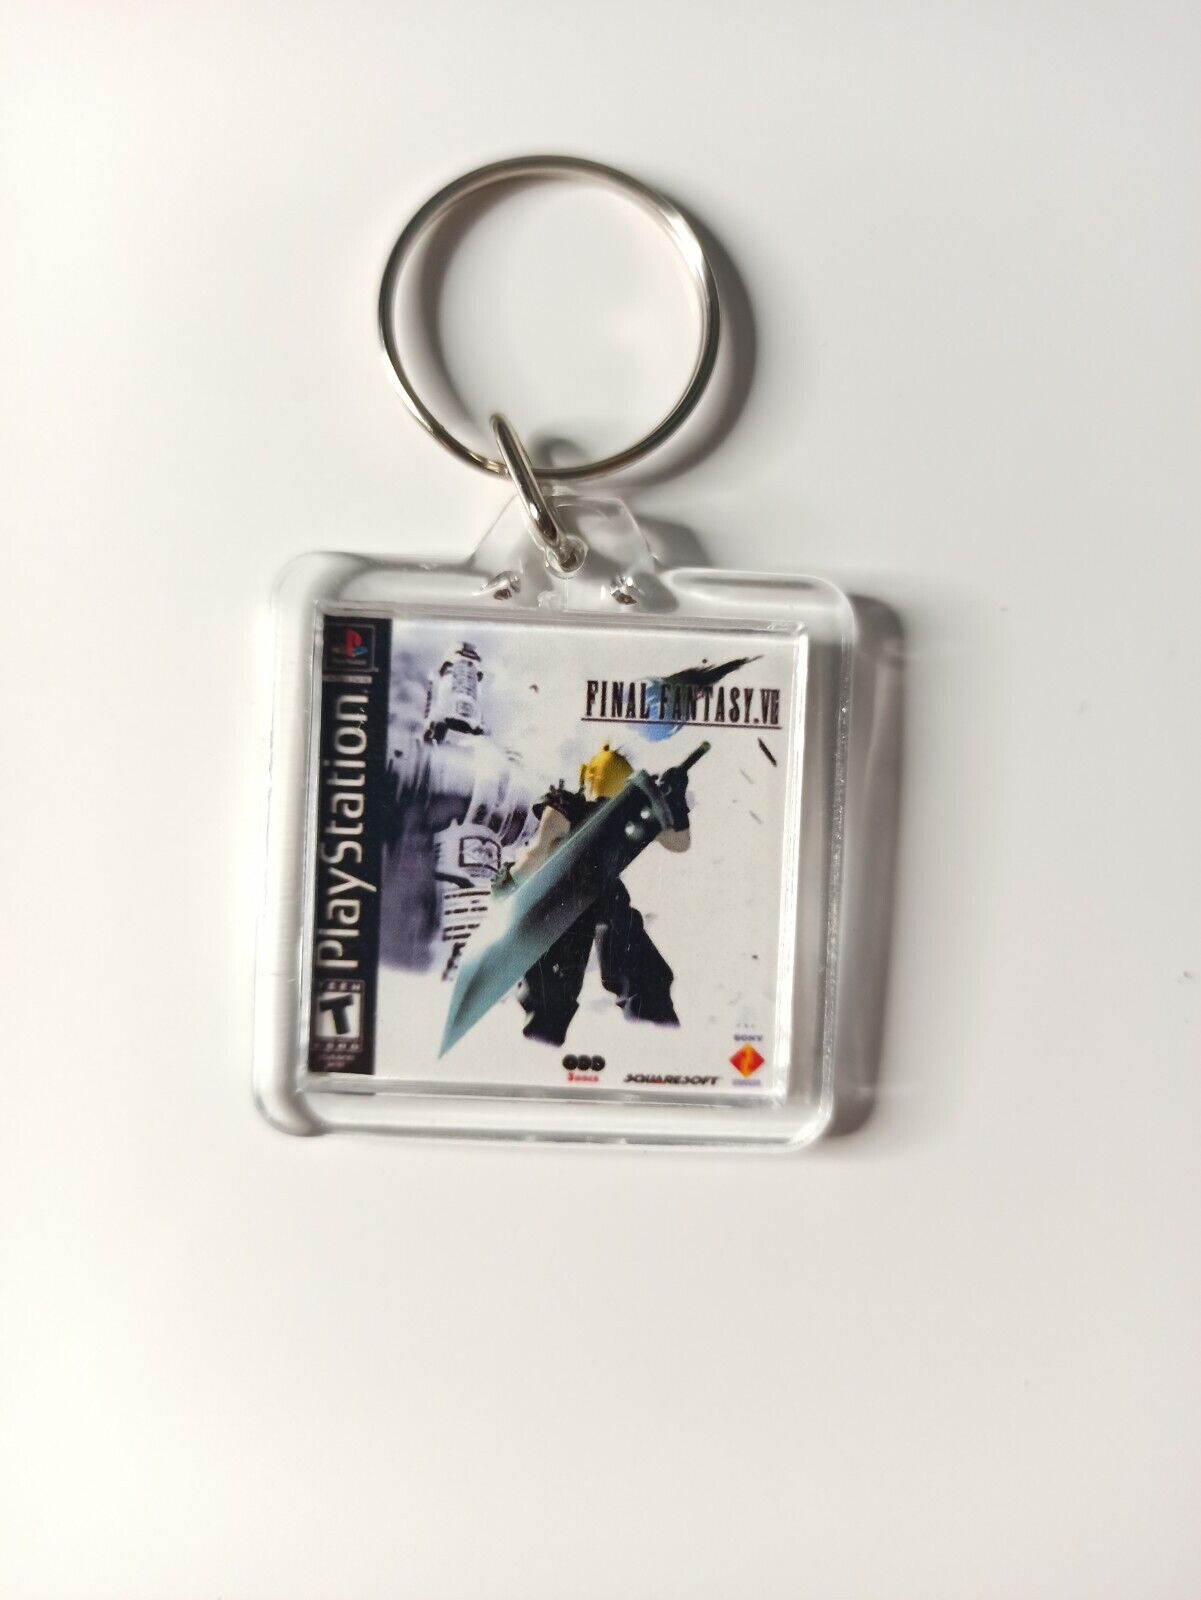 Final Fantasy 7 Keychain